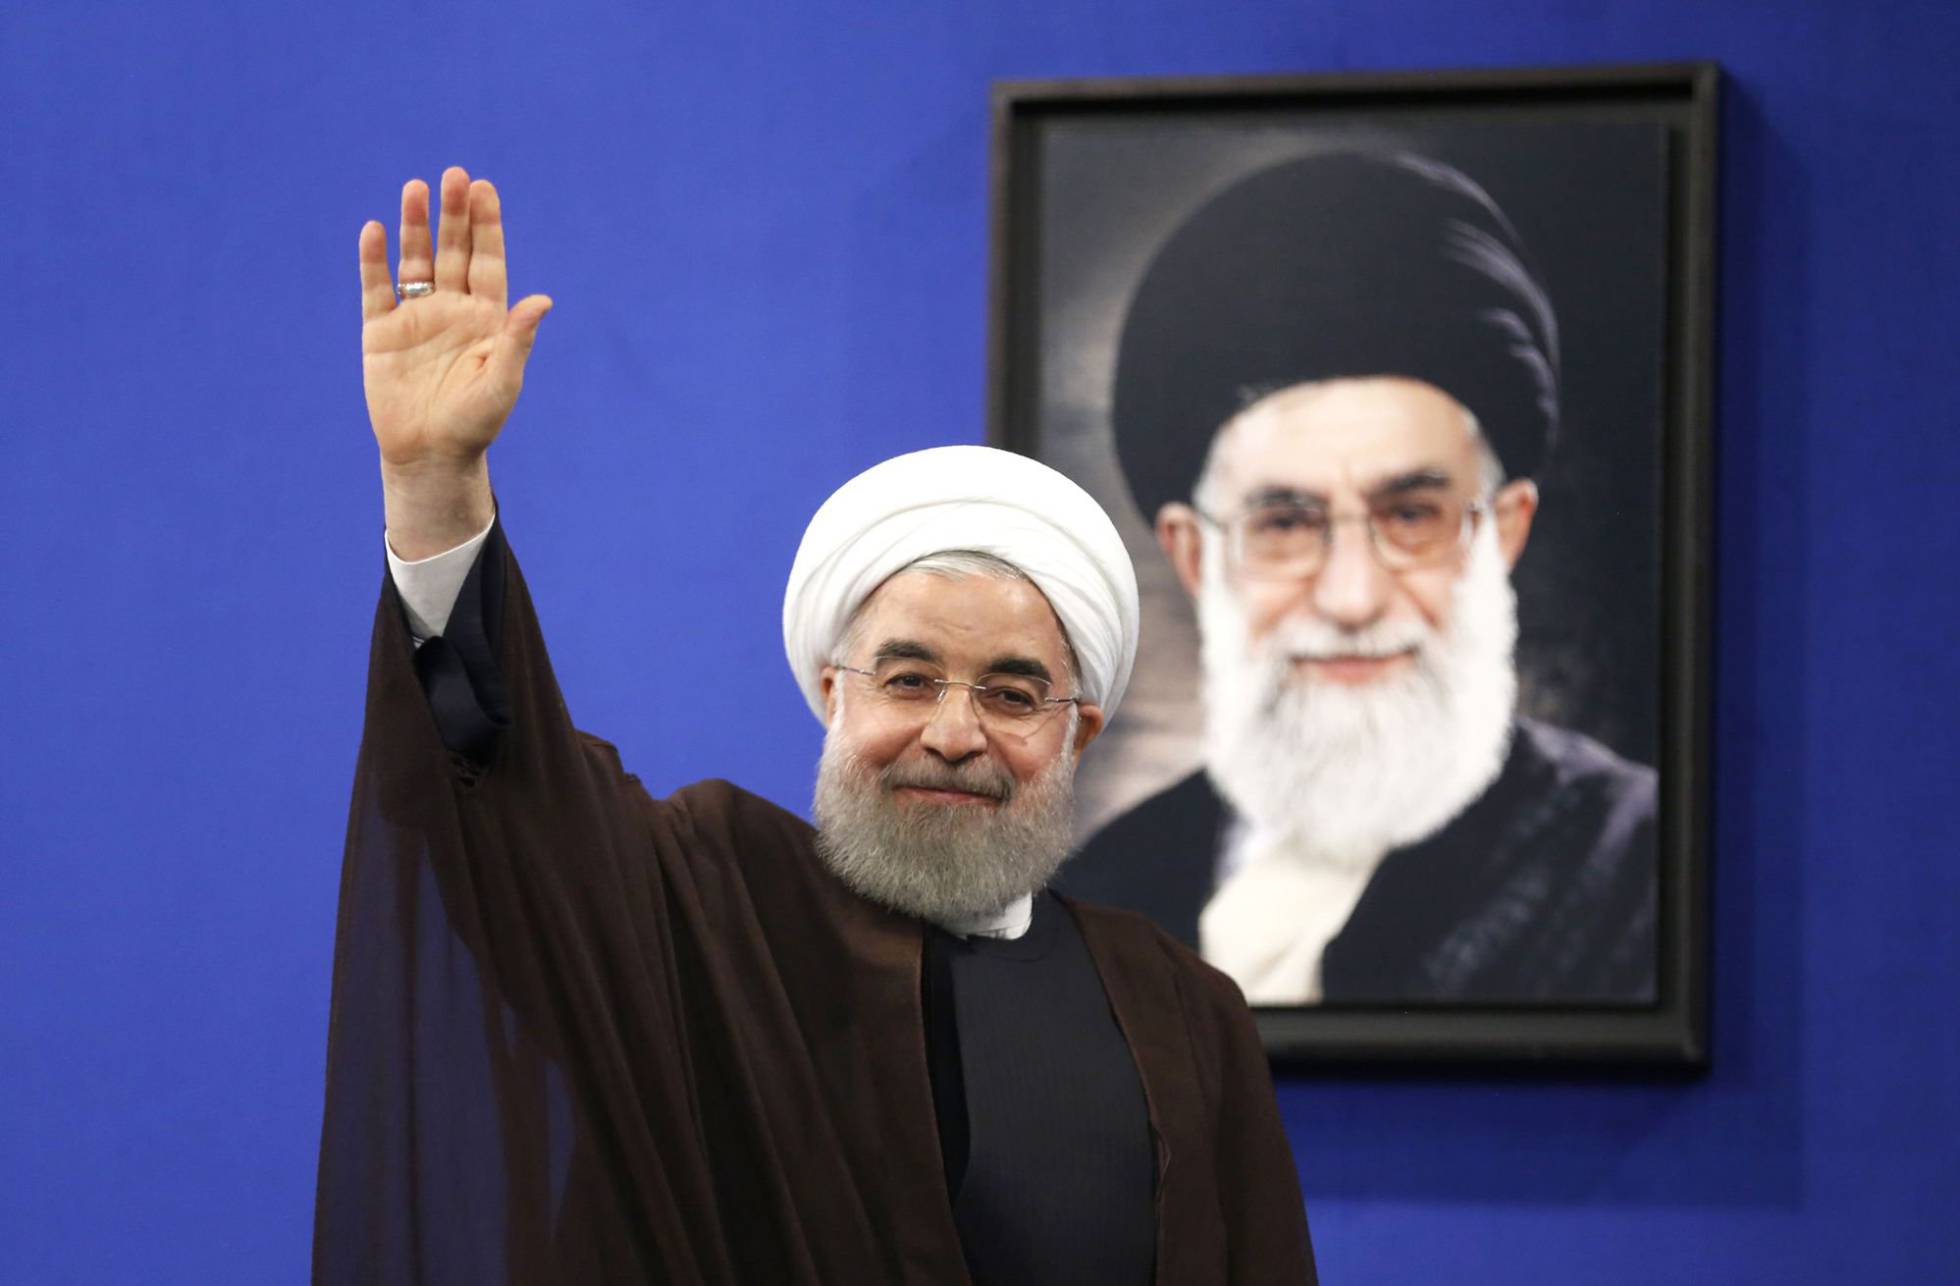 Irán - Hasan Rowhani - Candidato con mayoria en Iran;  calificado como moderado 1495300784_981451_1495302603_noticia_normal_recorte1